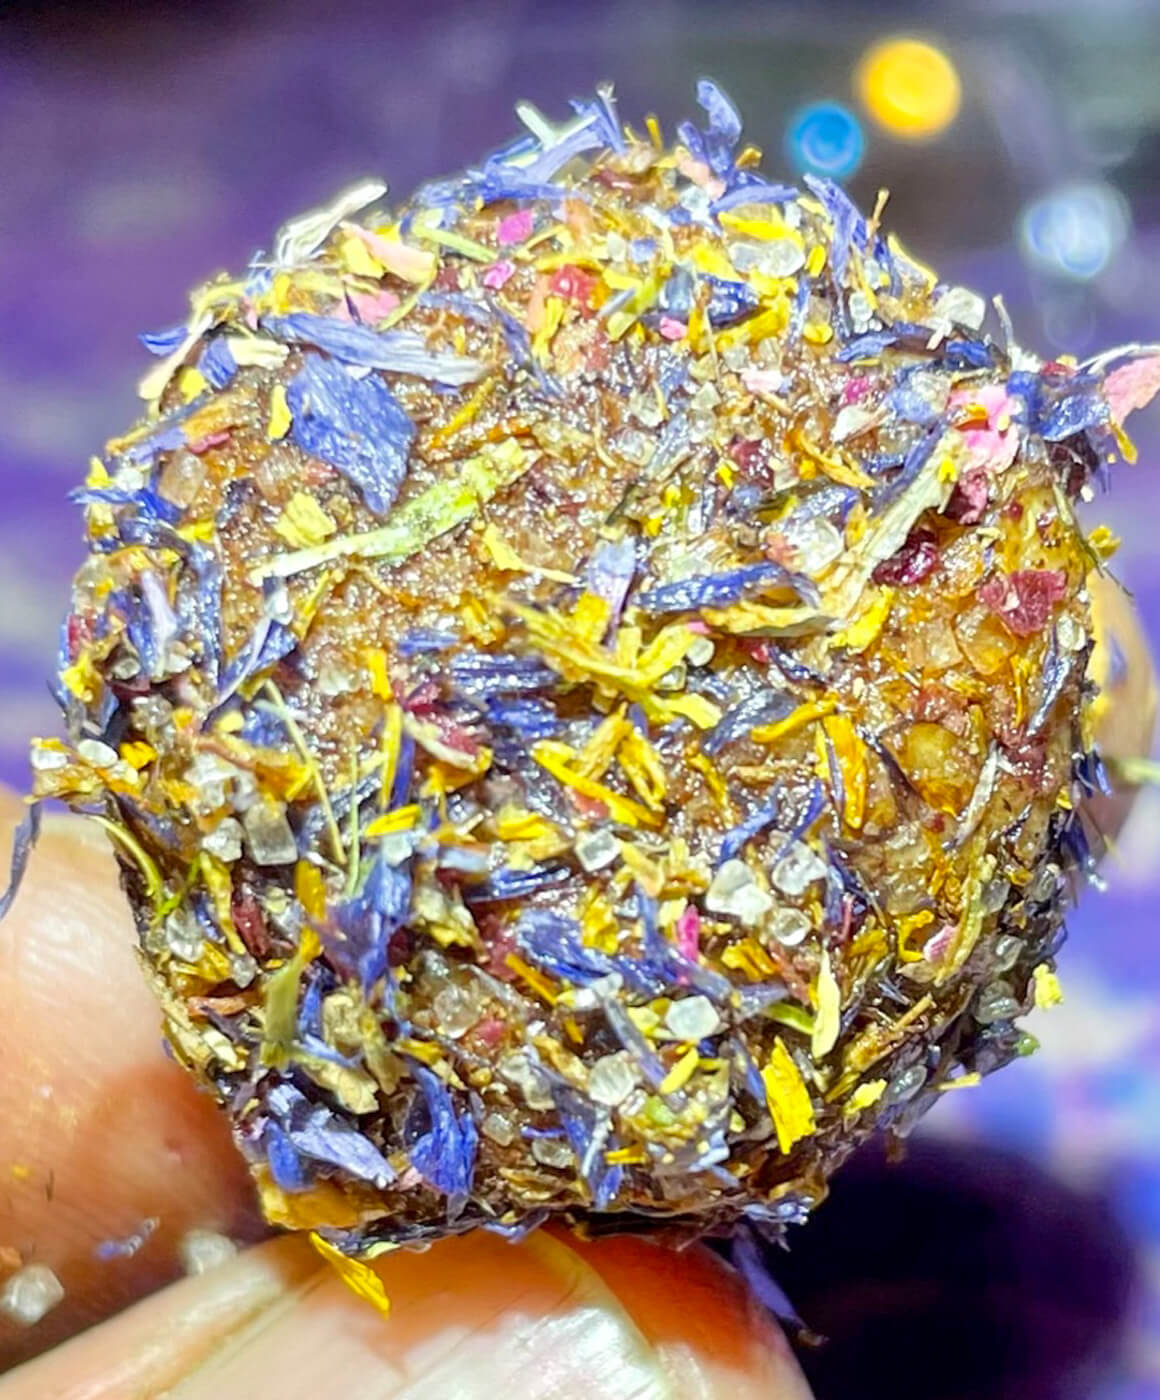 Sonja energy ball with edible flowers